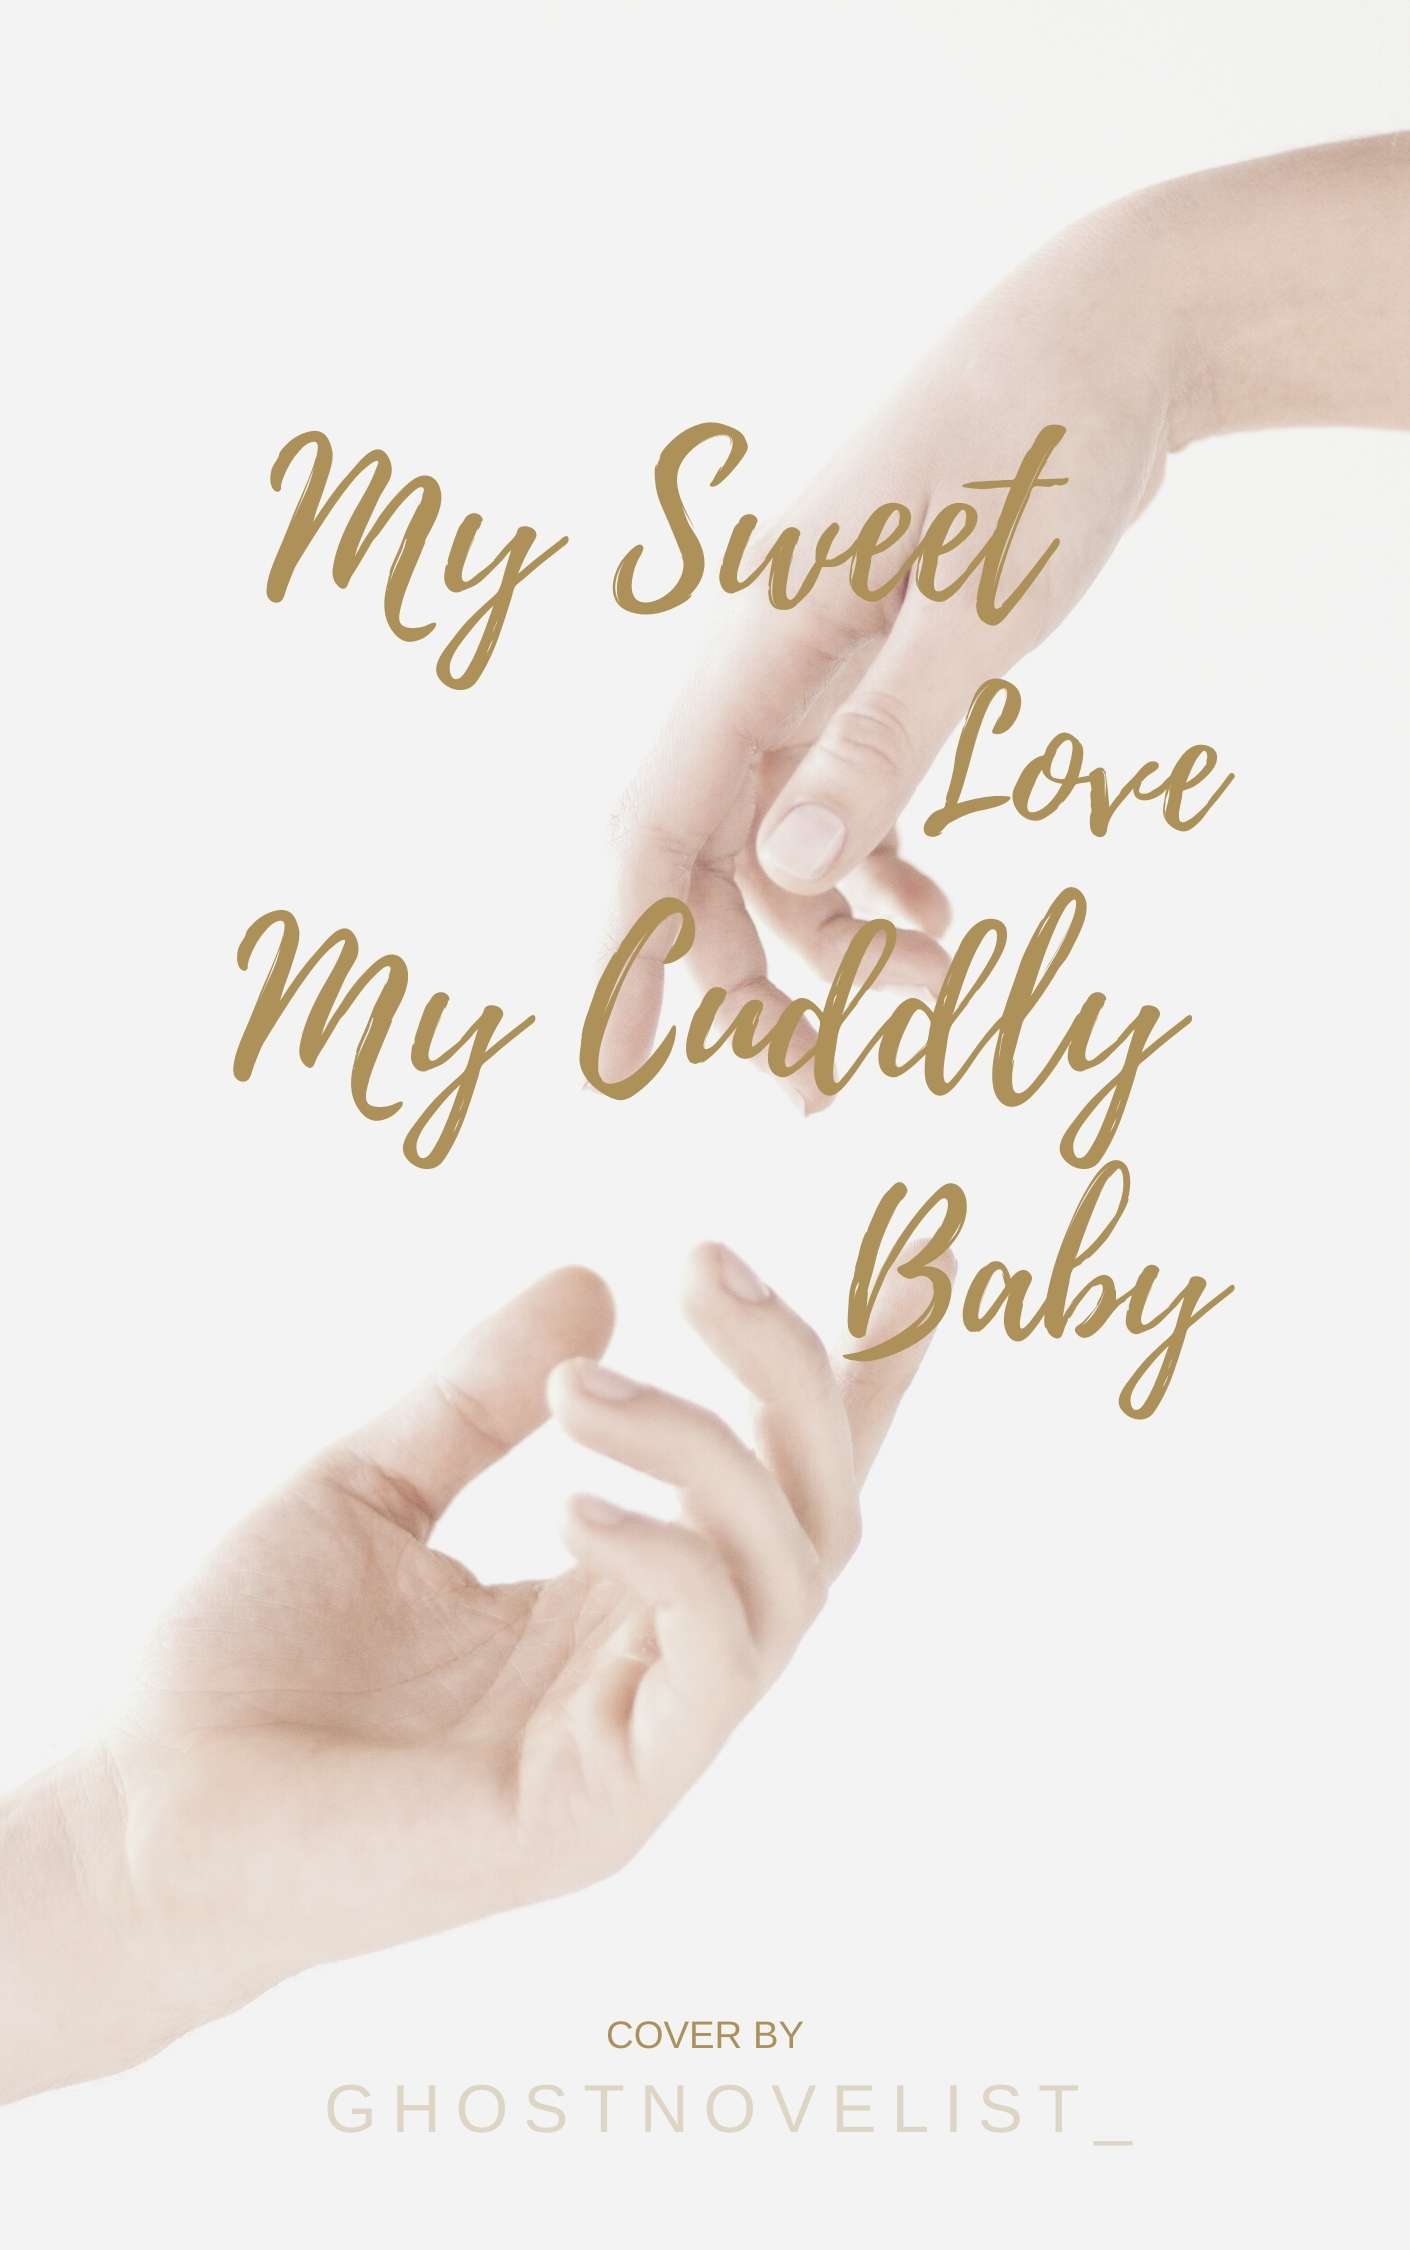 My Sweet Love, My Cuddly Baby